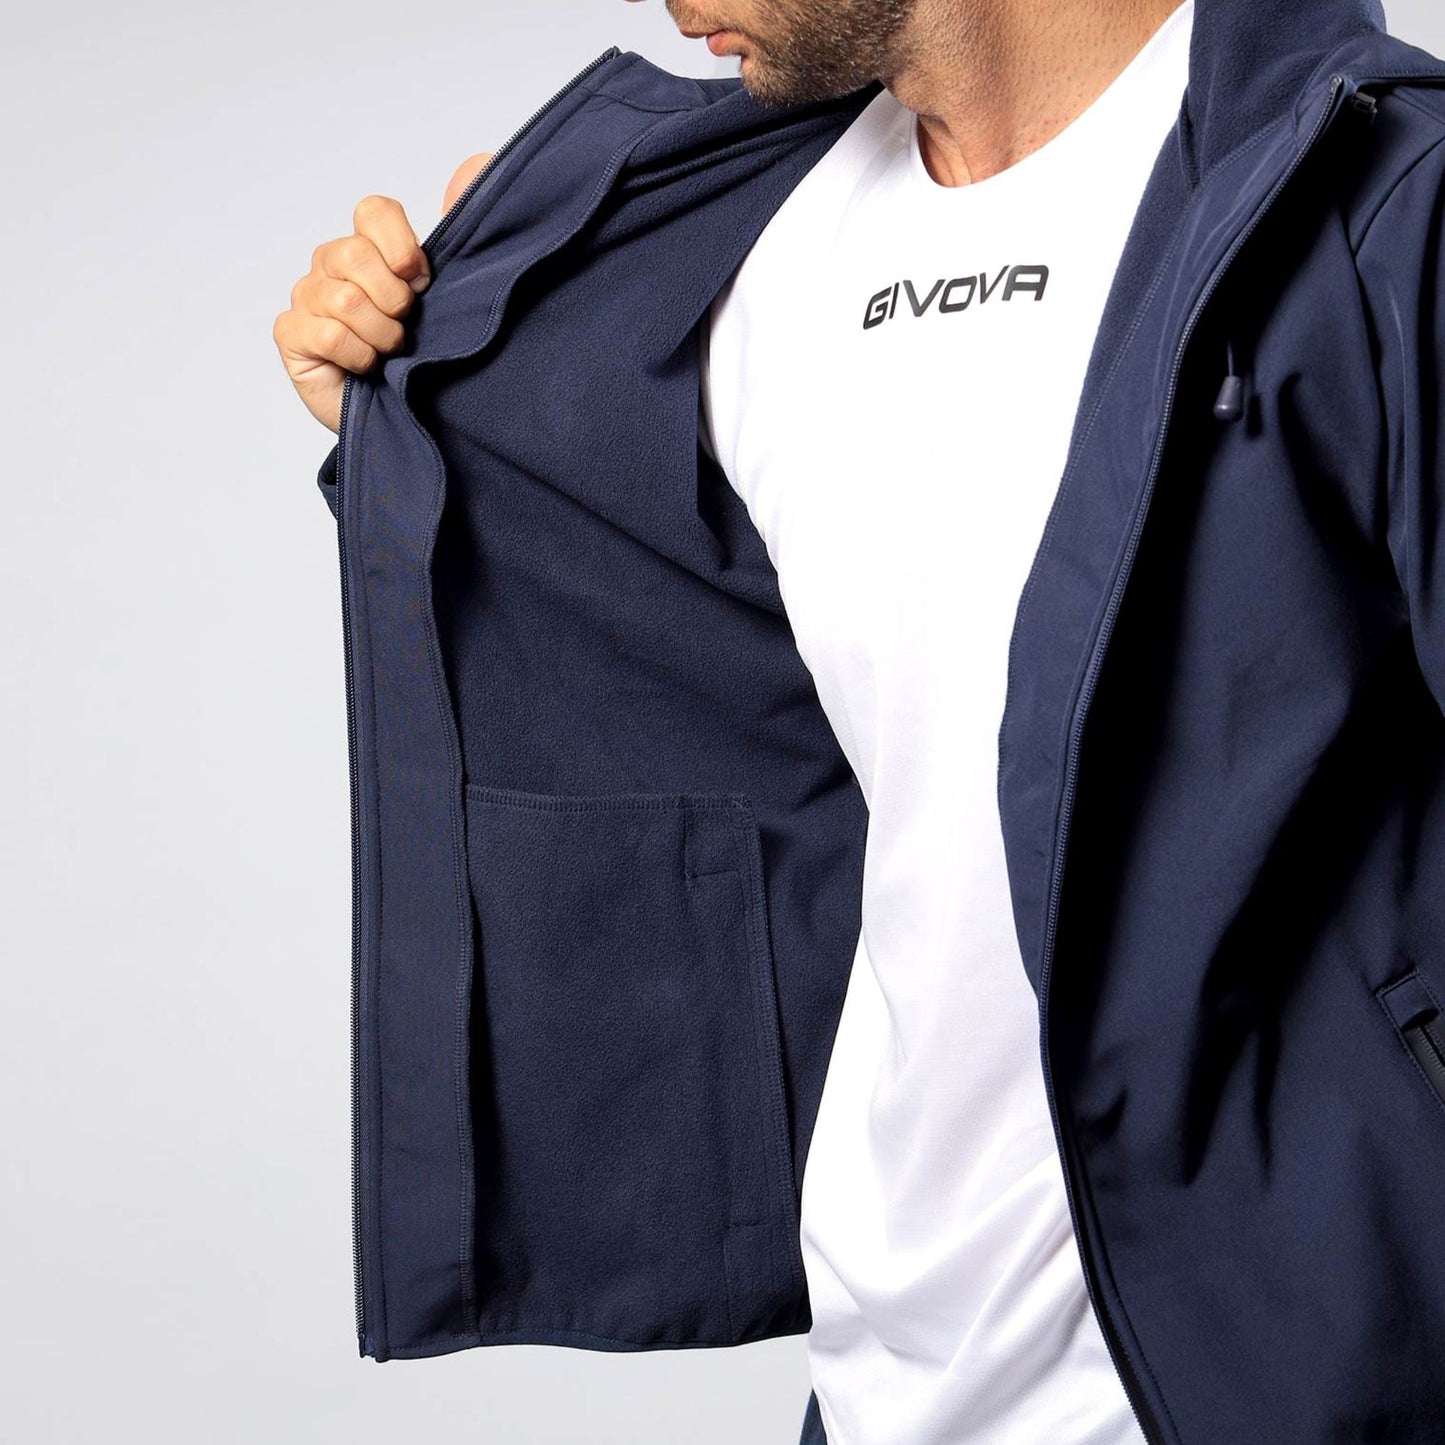 Givova Soft Shell Hooded Jacket - ITASPORT TEAMWEAR